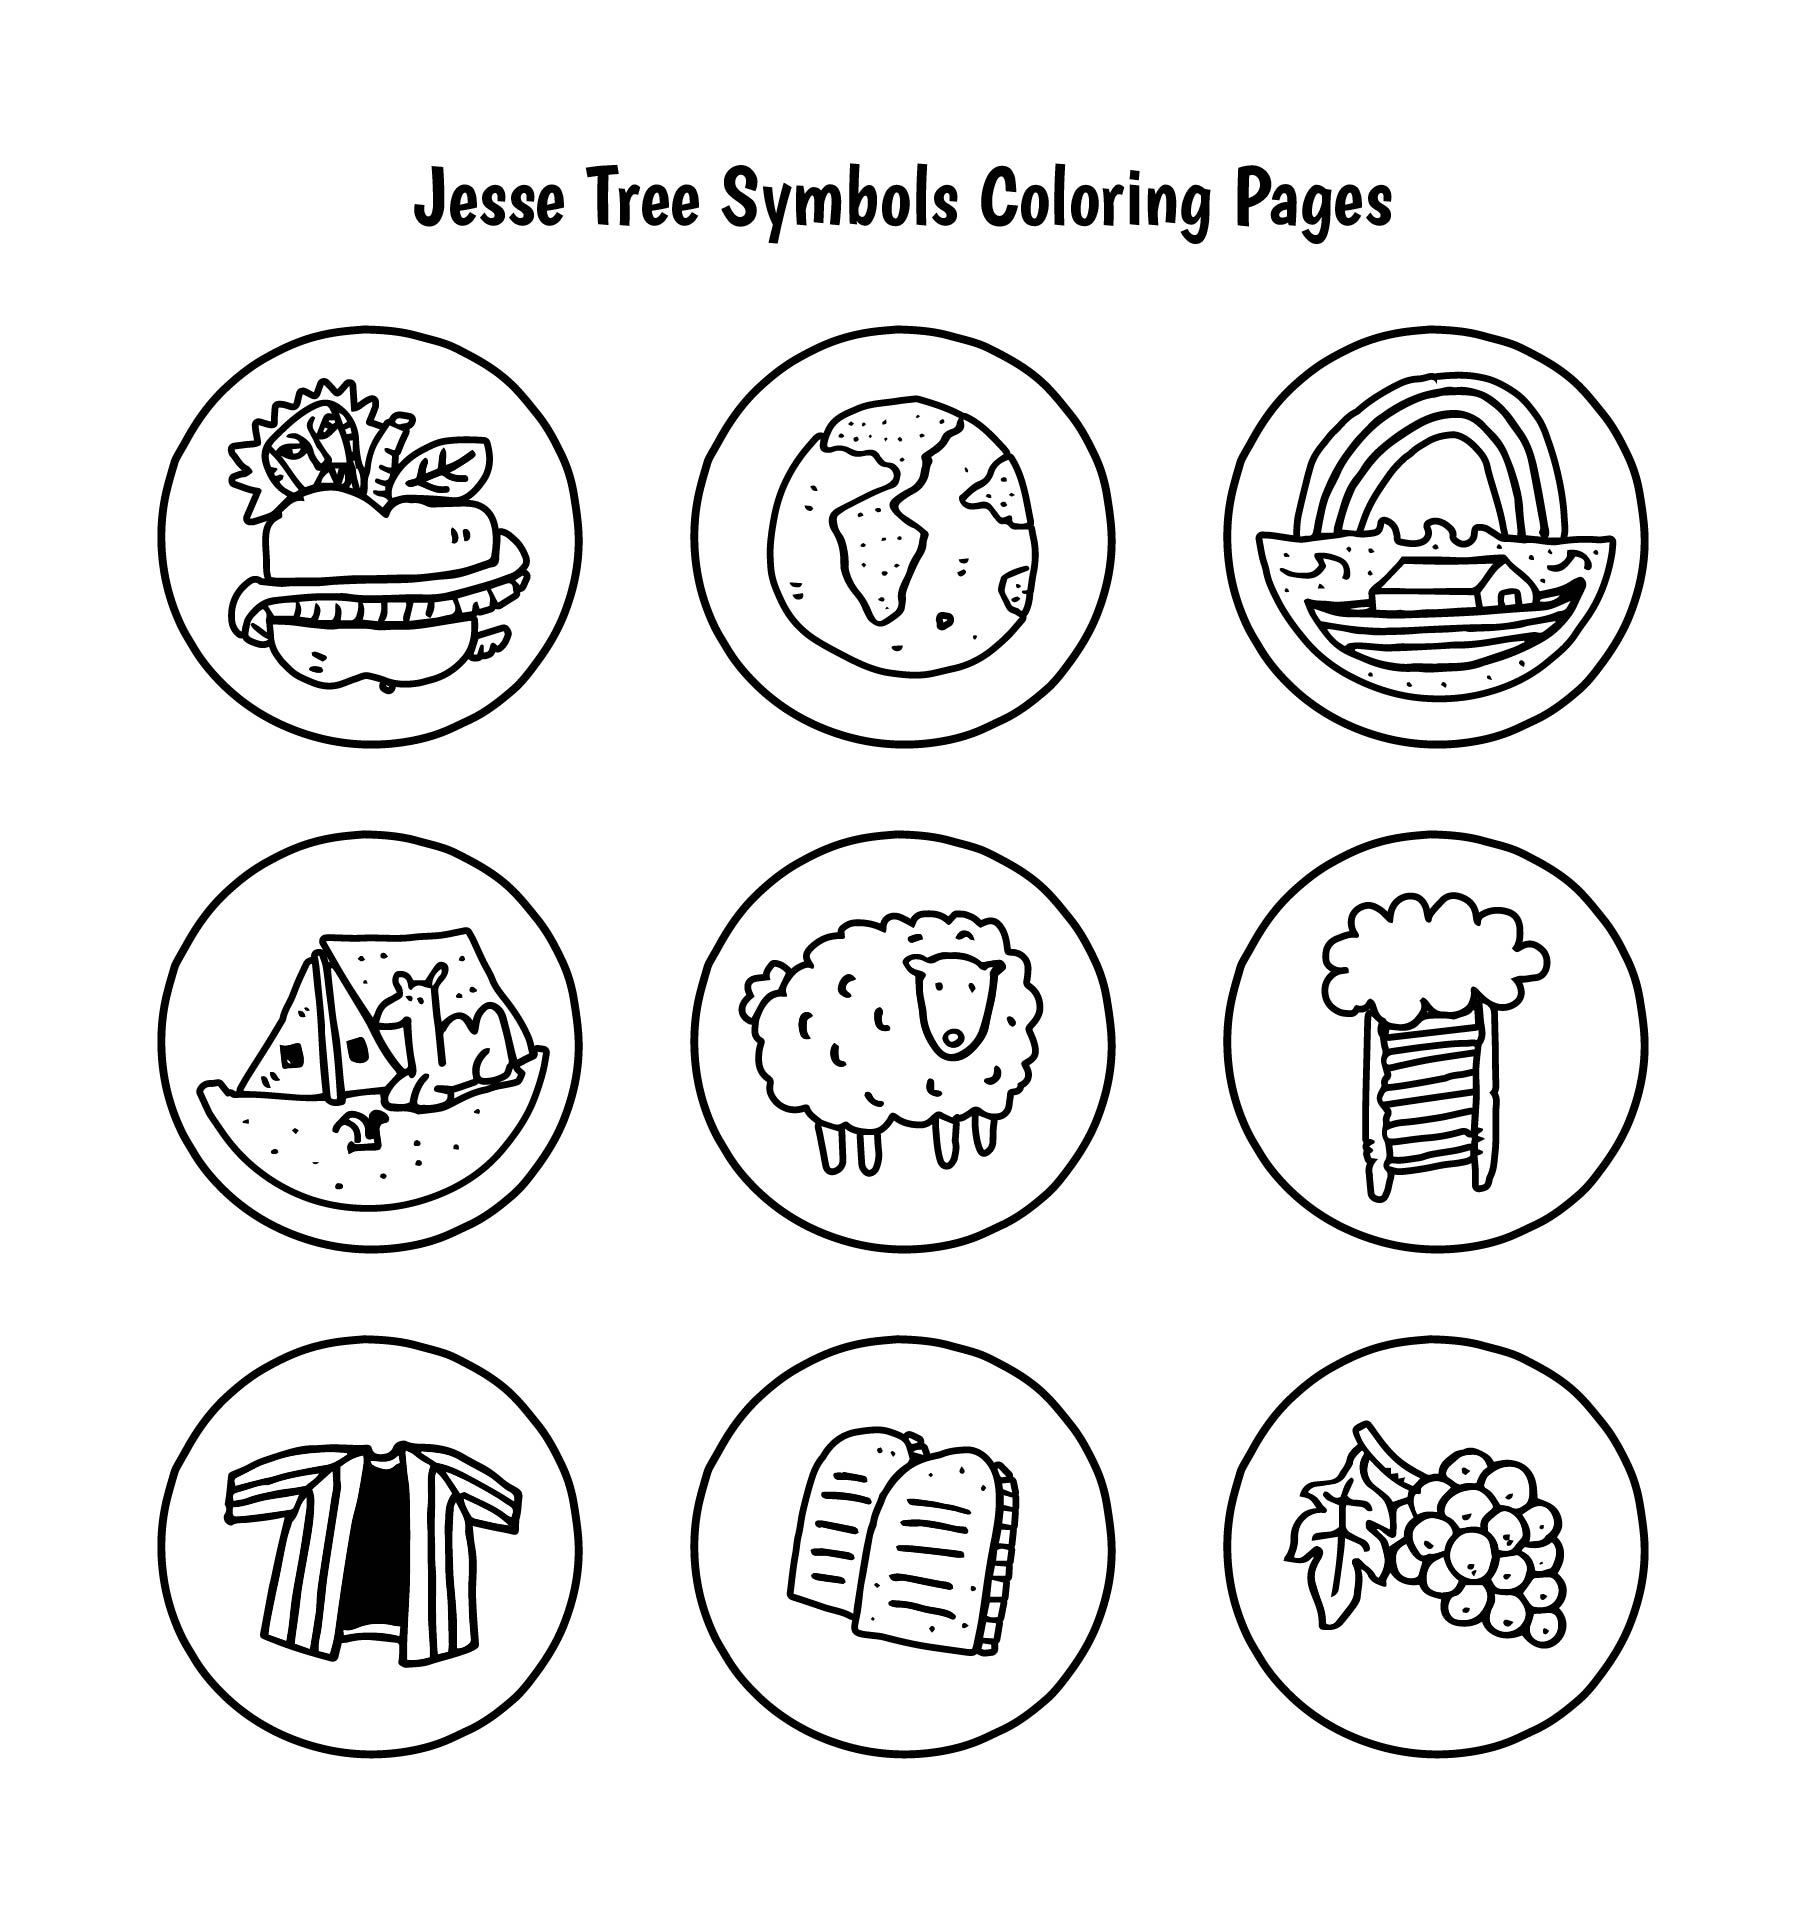 Jesse Tree Symbols Coloring Pages